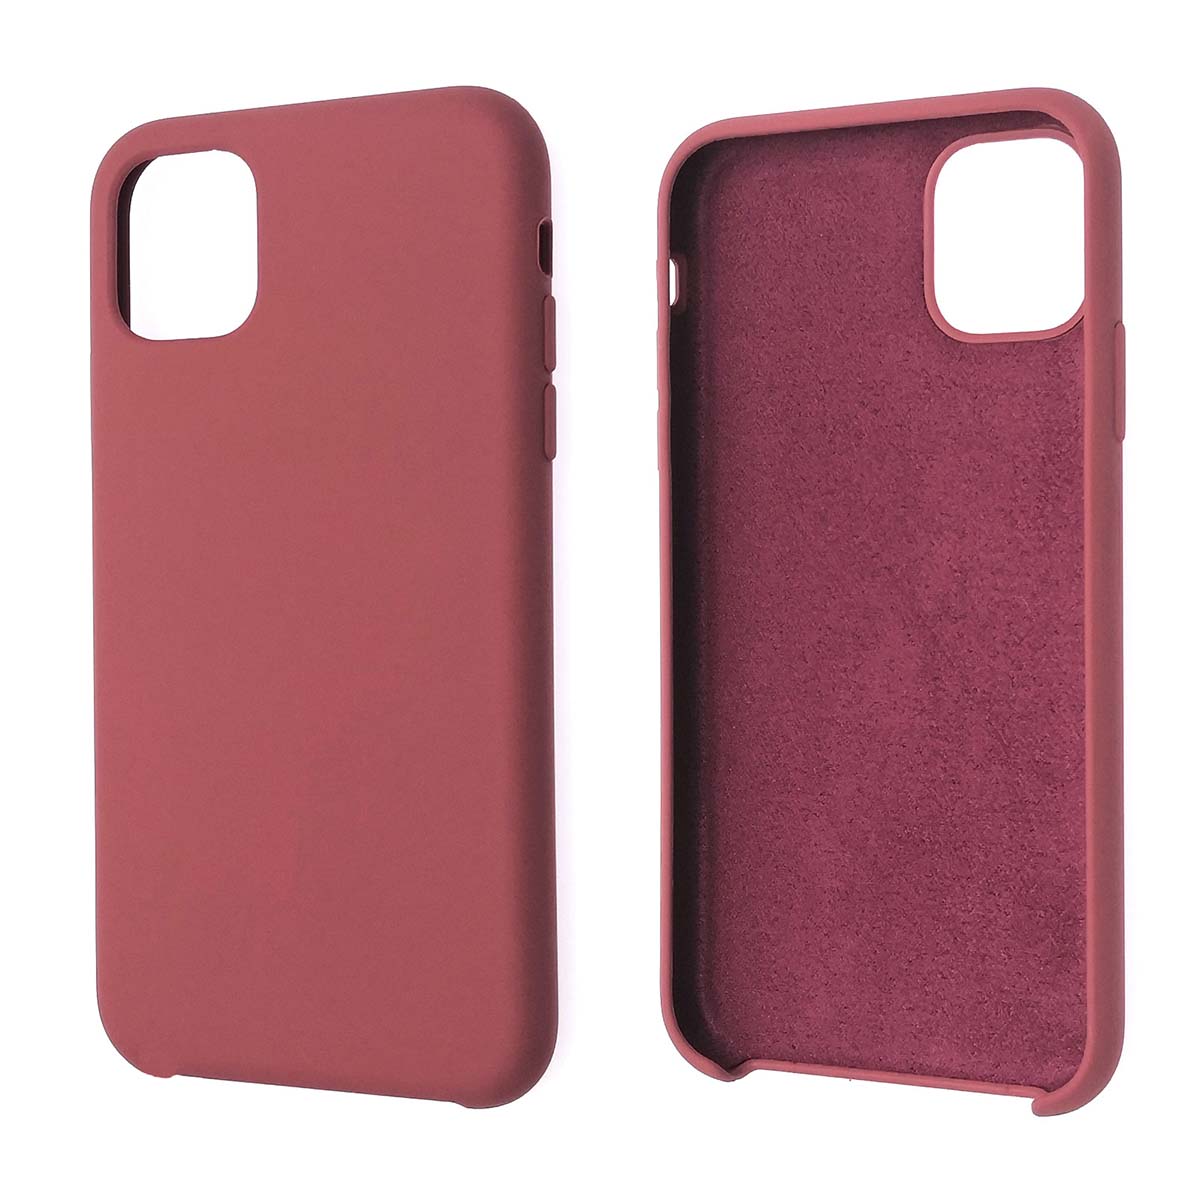 Чехол накладка Silicon Case для APPLE iPhone 11 2019, силикон, бархат, цвет розовая питайя